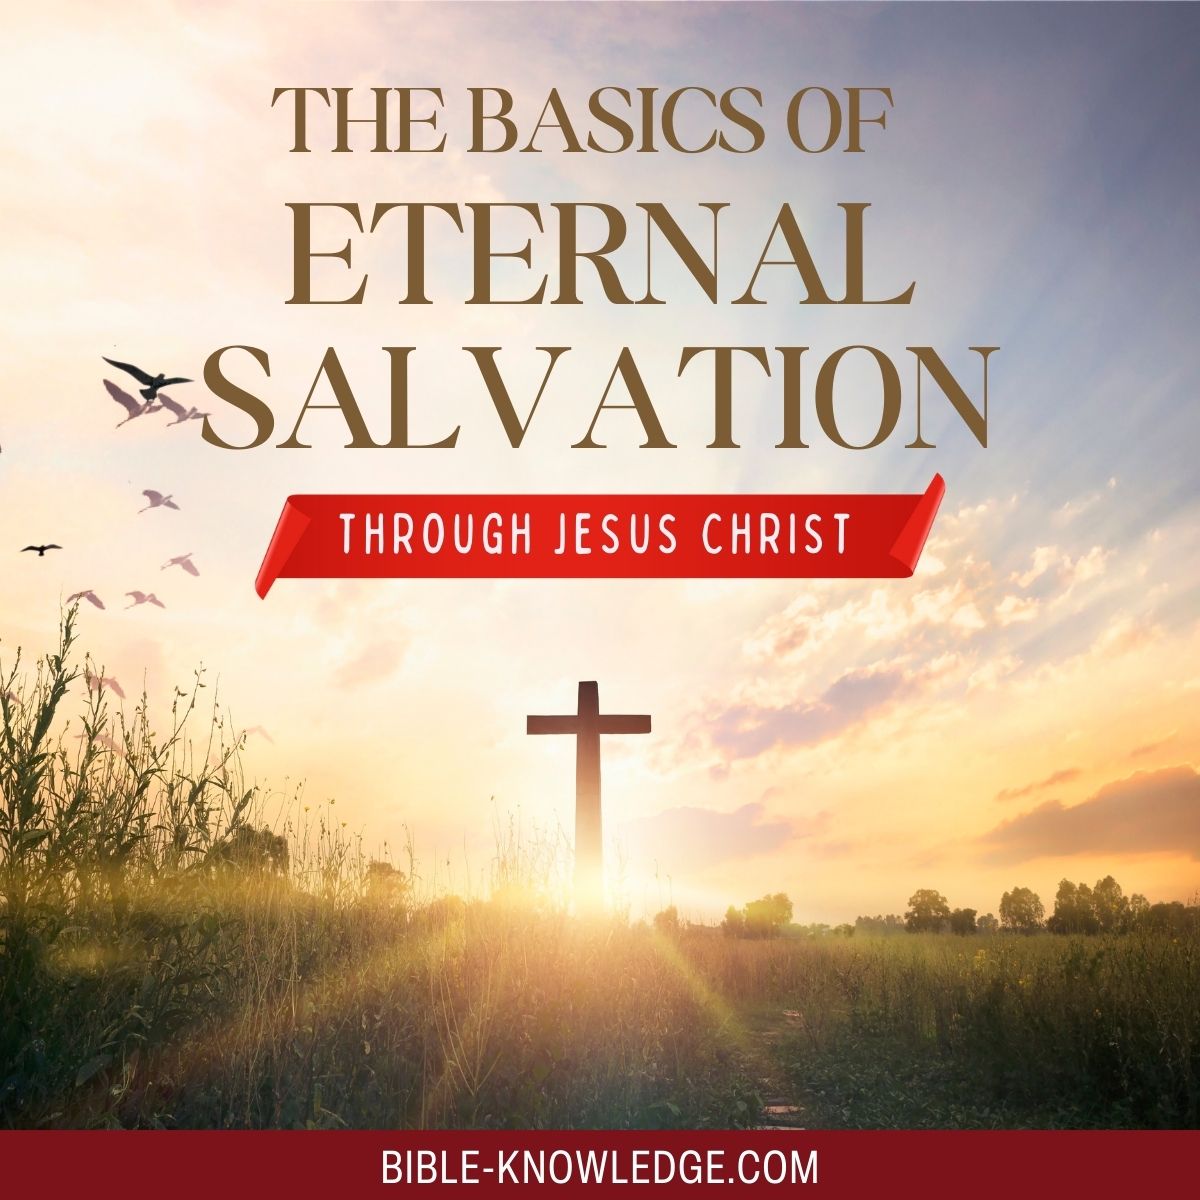 The Basics of Eternal Salvation Through Jesus Christ